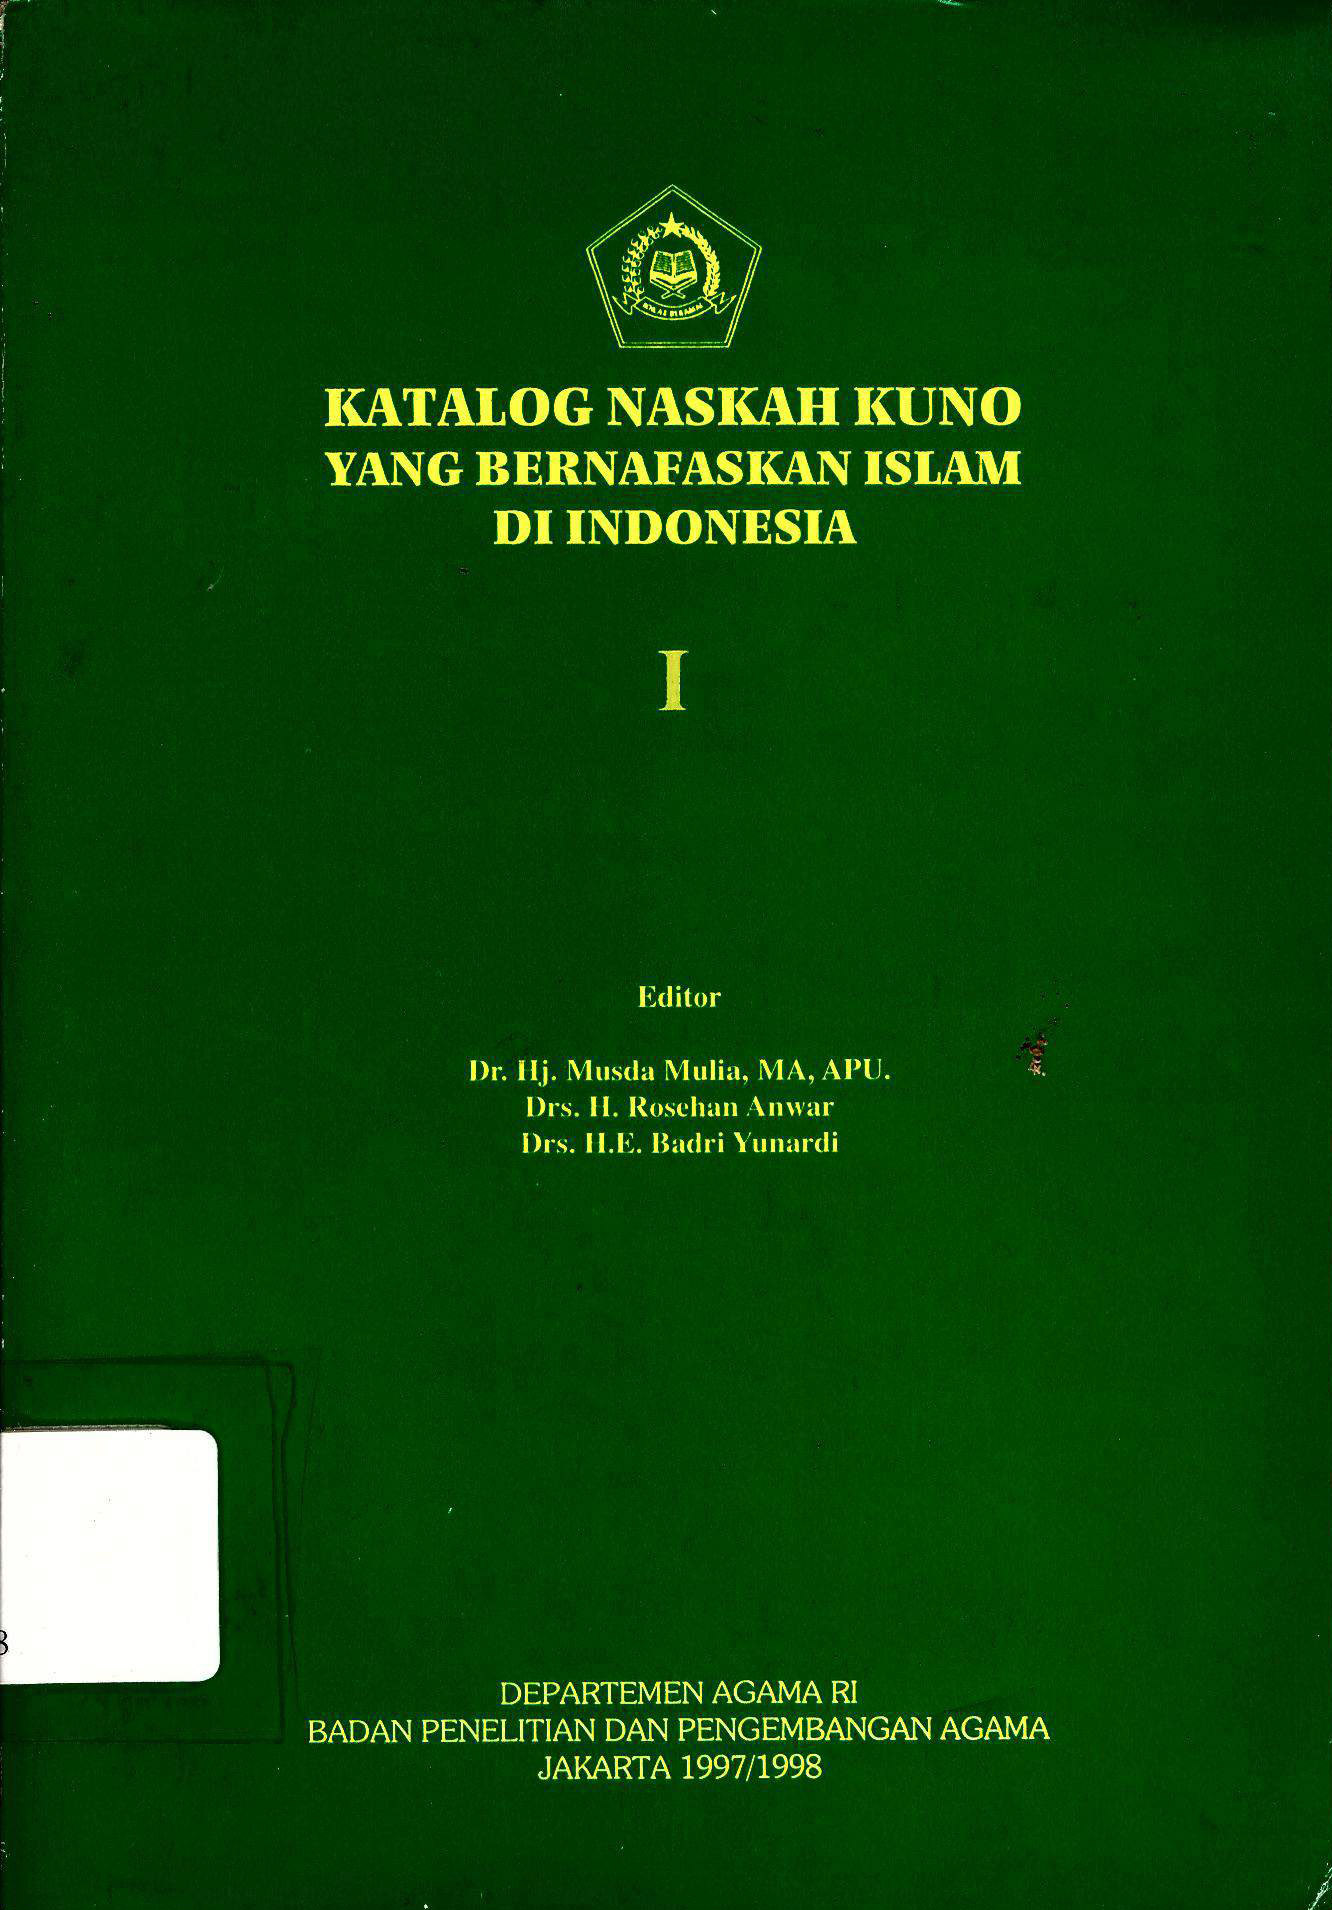 Katalog Naskah Kuno yang Bernafaskan Islam di Indonesia I